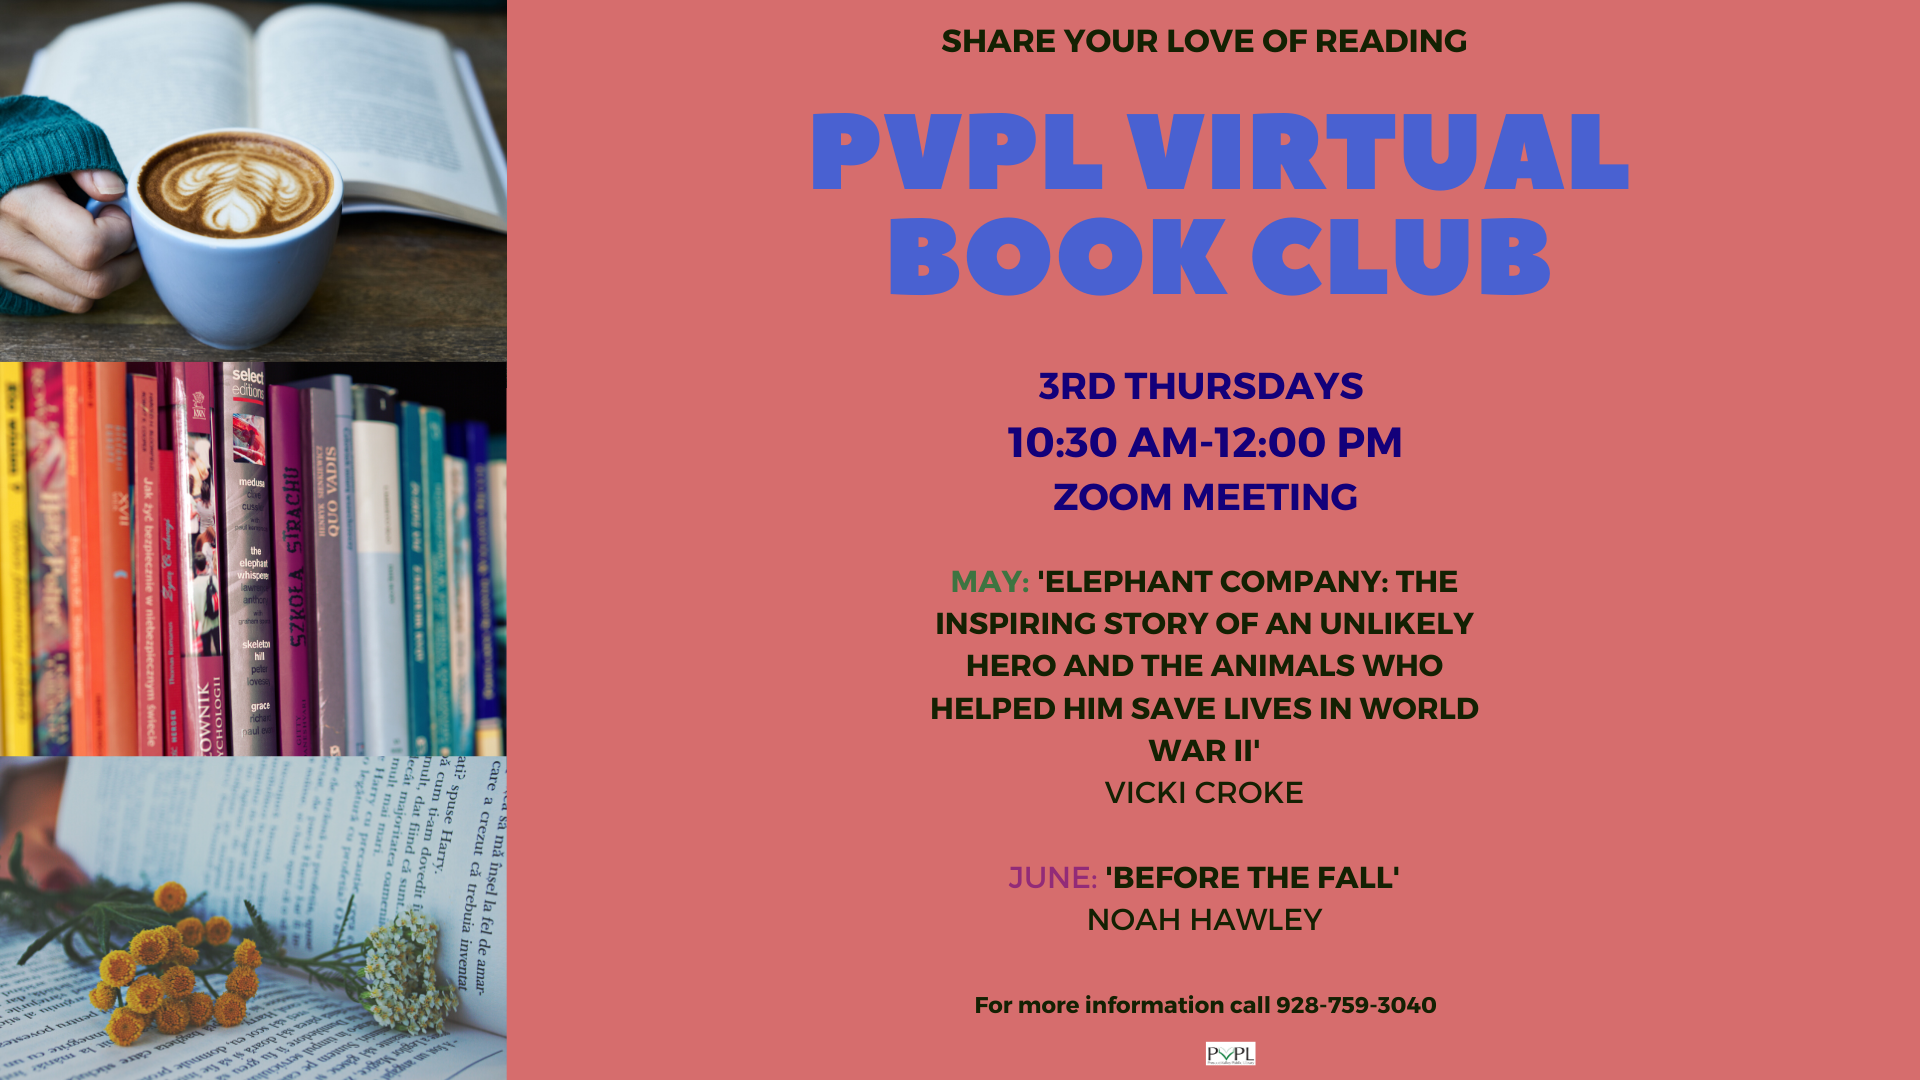 "Prescott Valley Public Library Virtual Book Club - May 21st, 2020 Meeting "